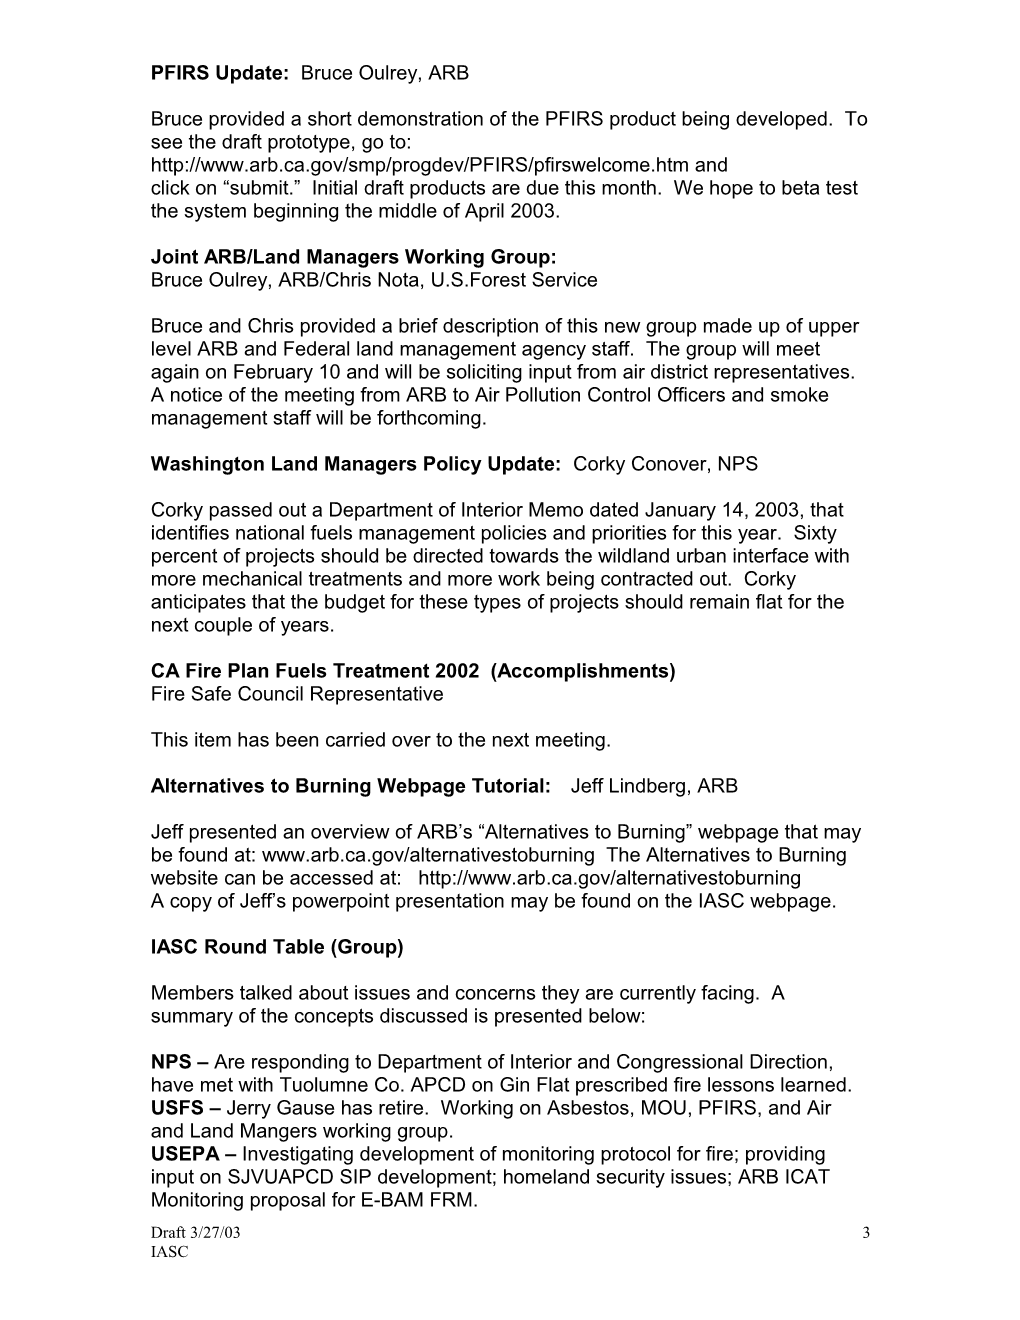 IASC Meeting Summary January 22-23, 2003